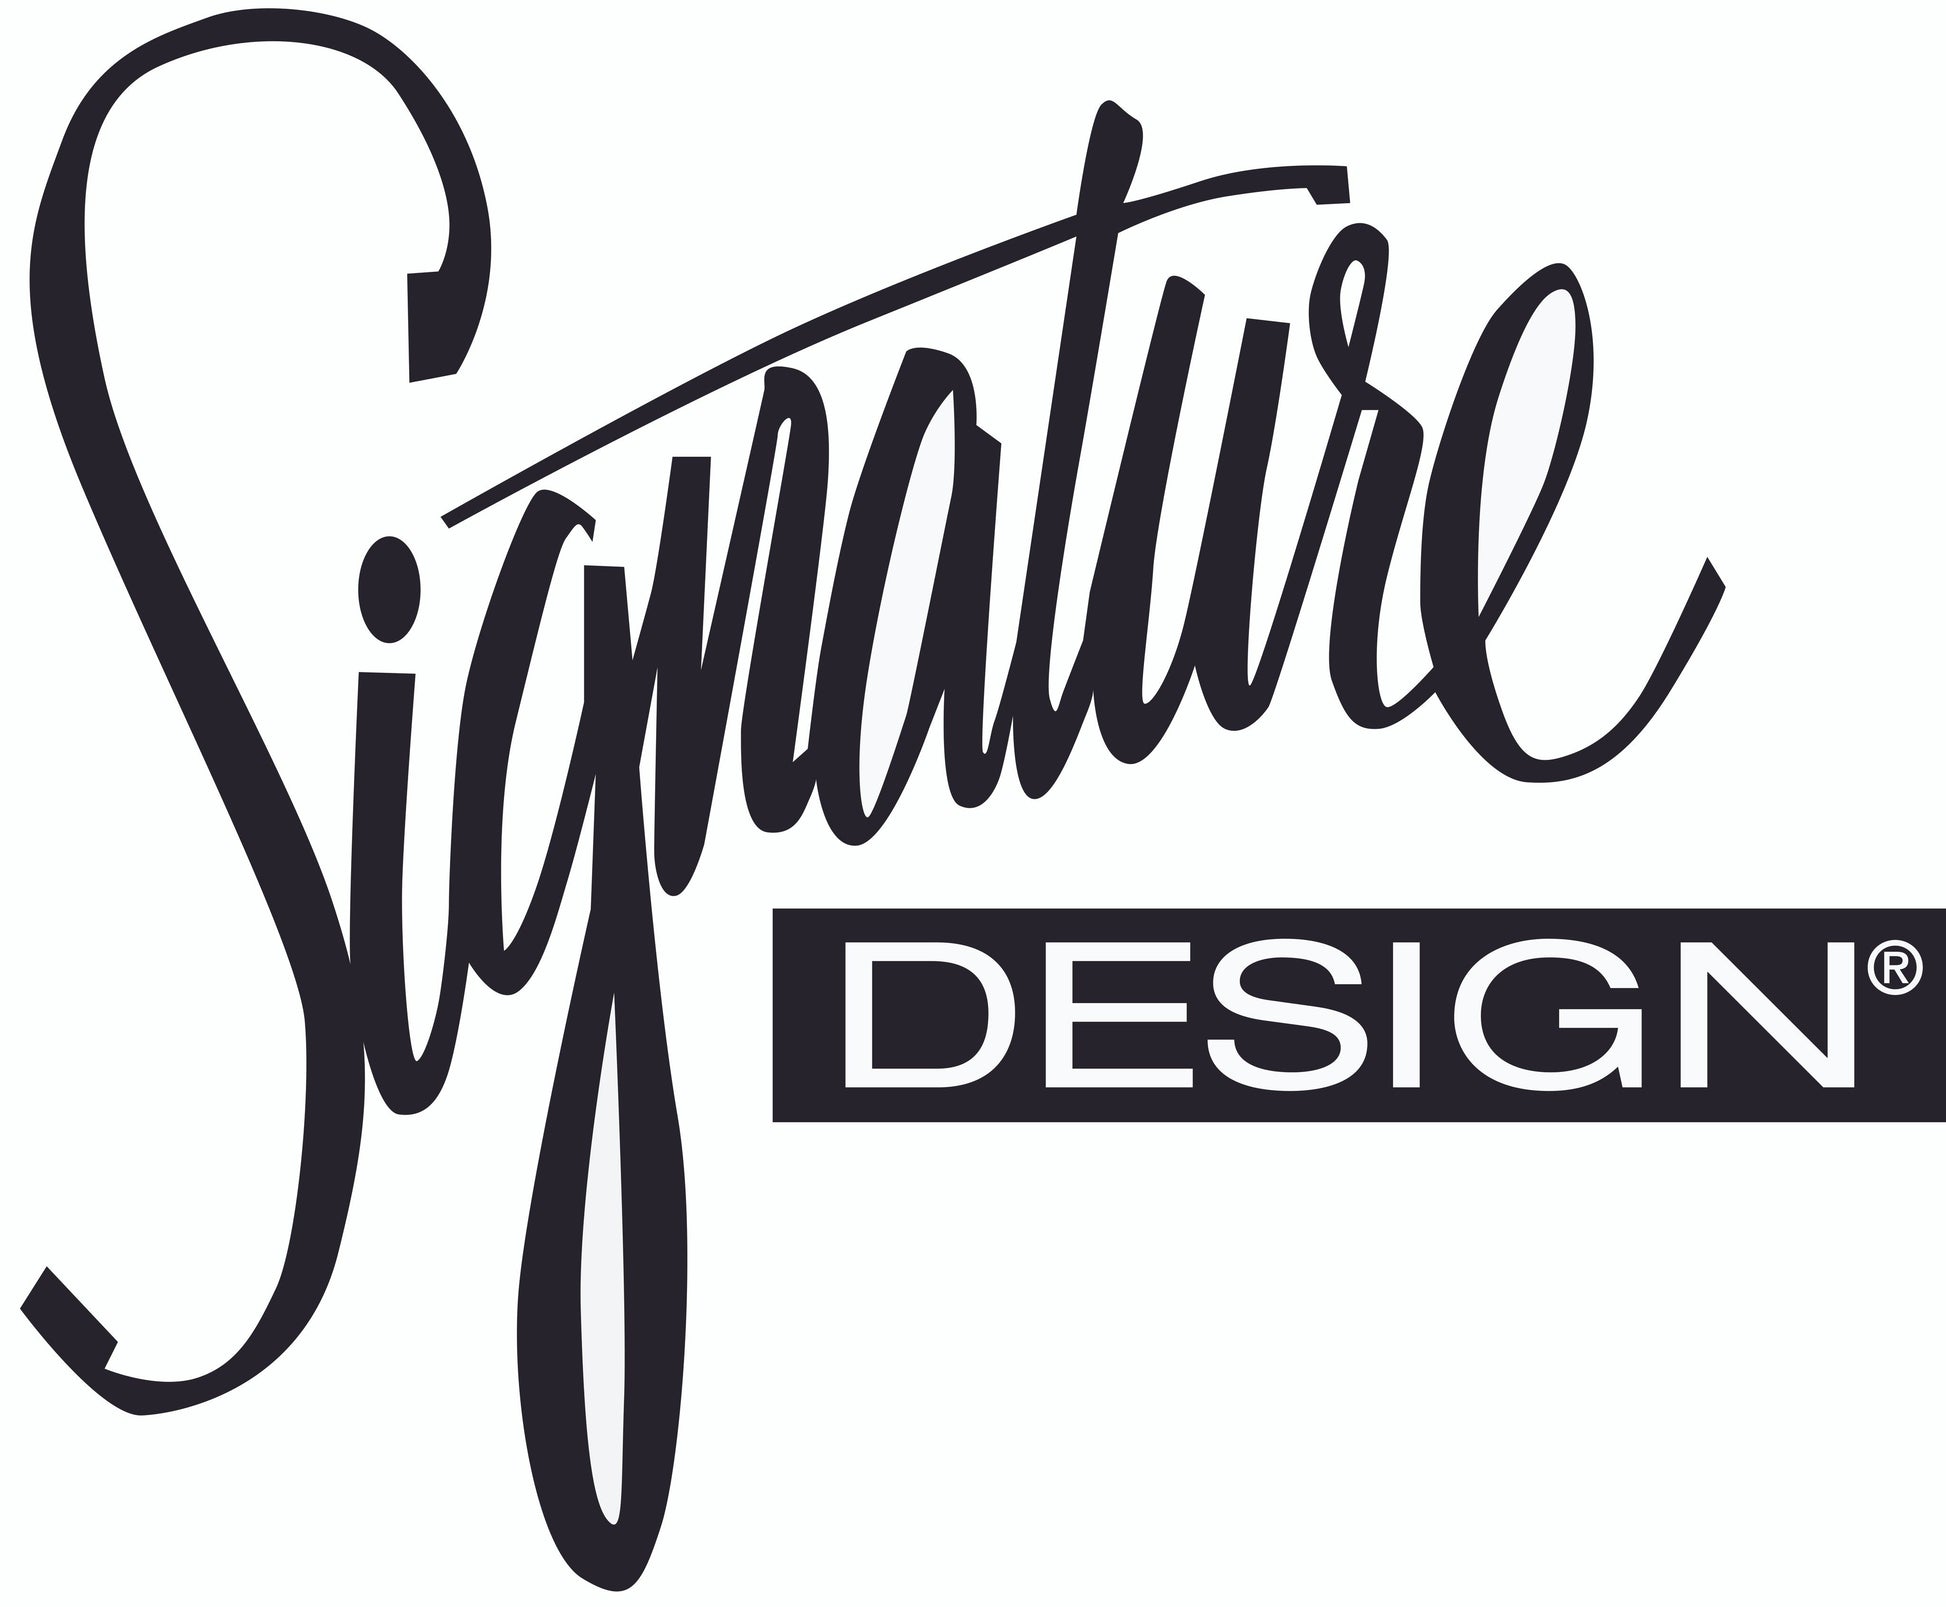 Danabrin Dresser and Mirror Signature Design by Ashley®